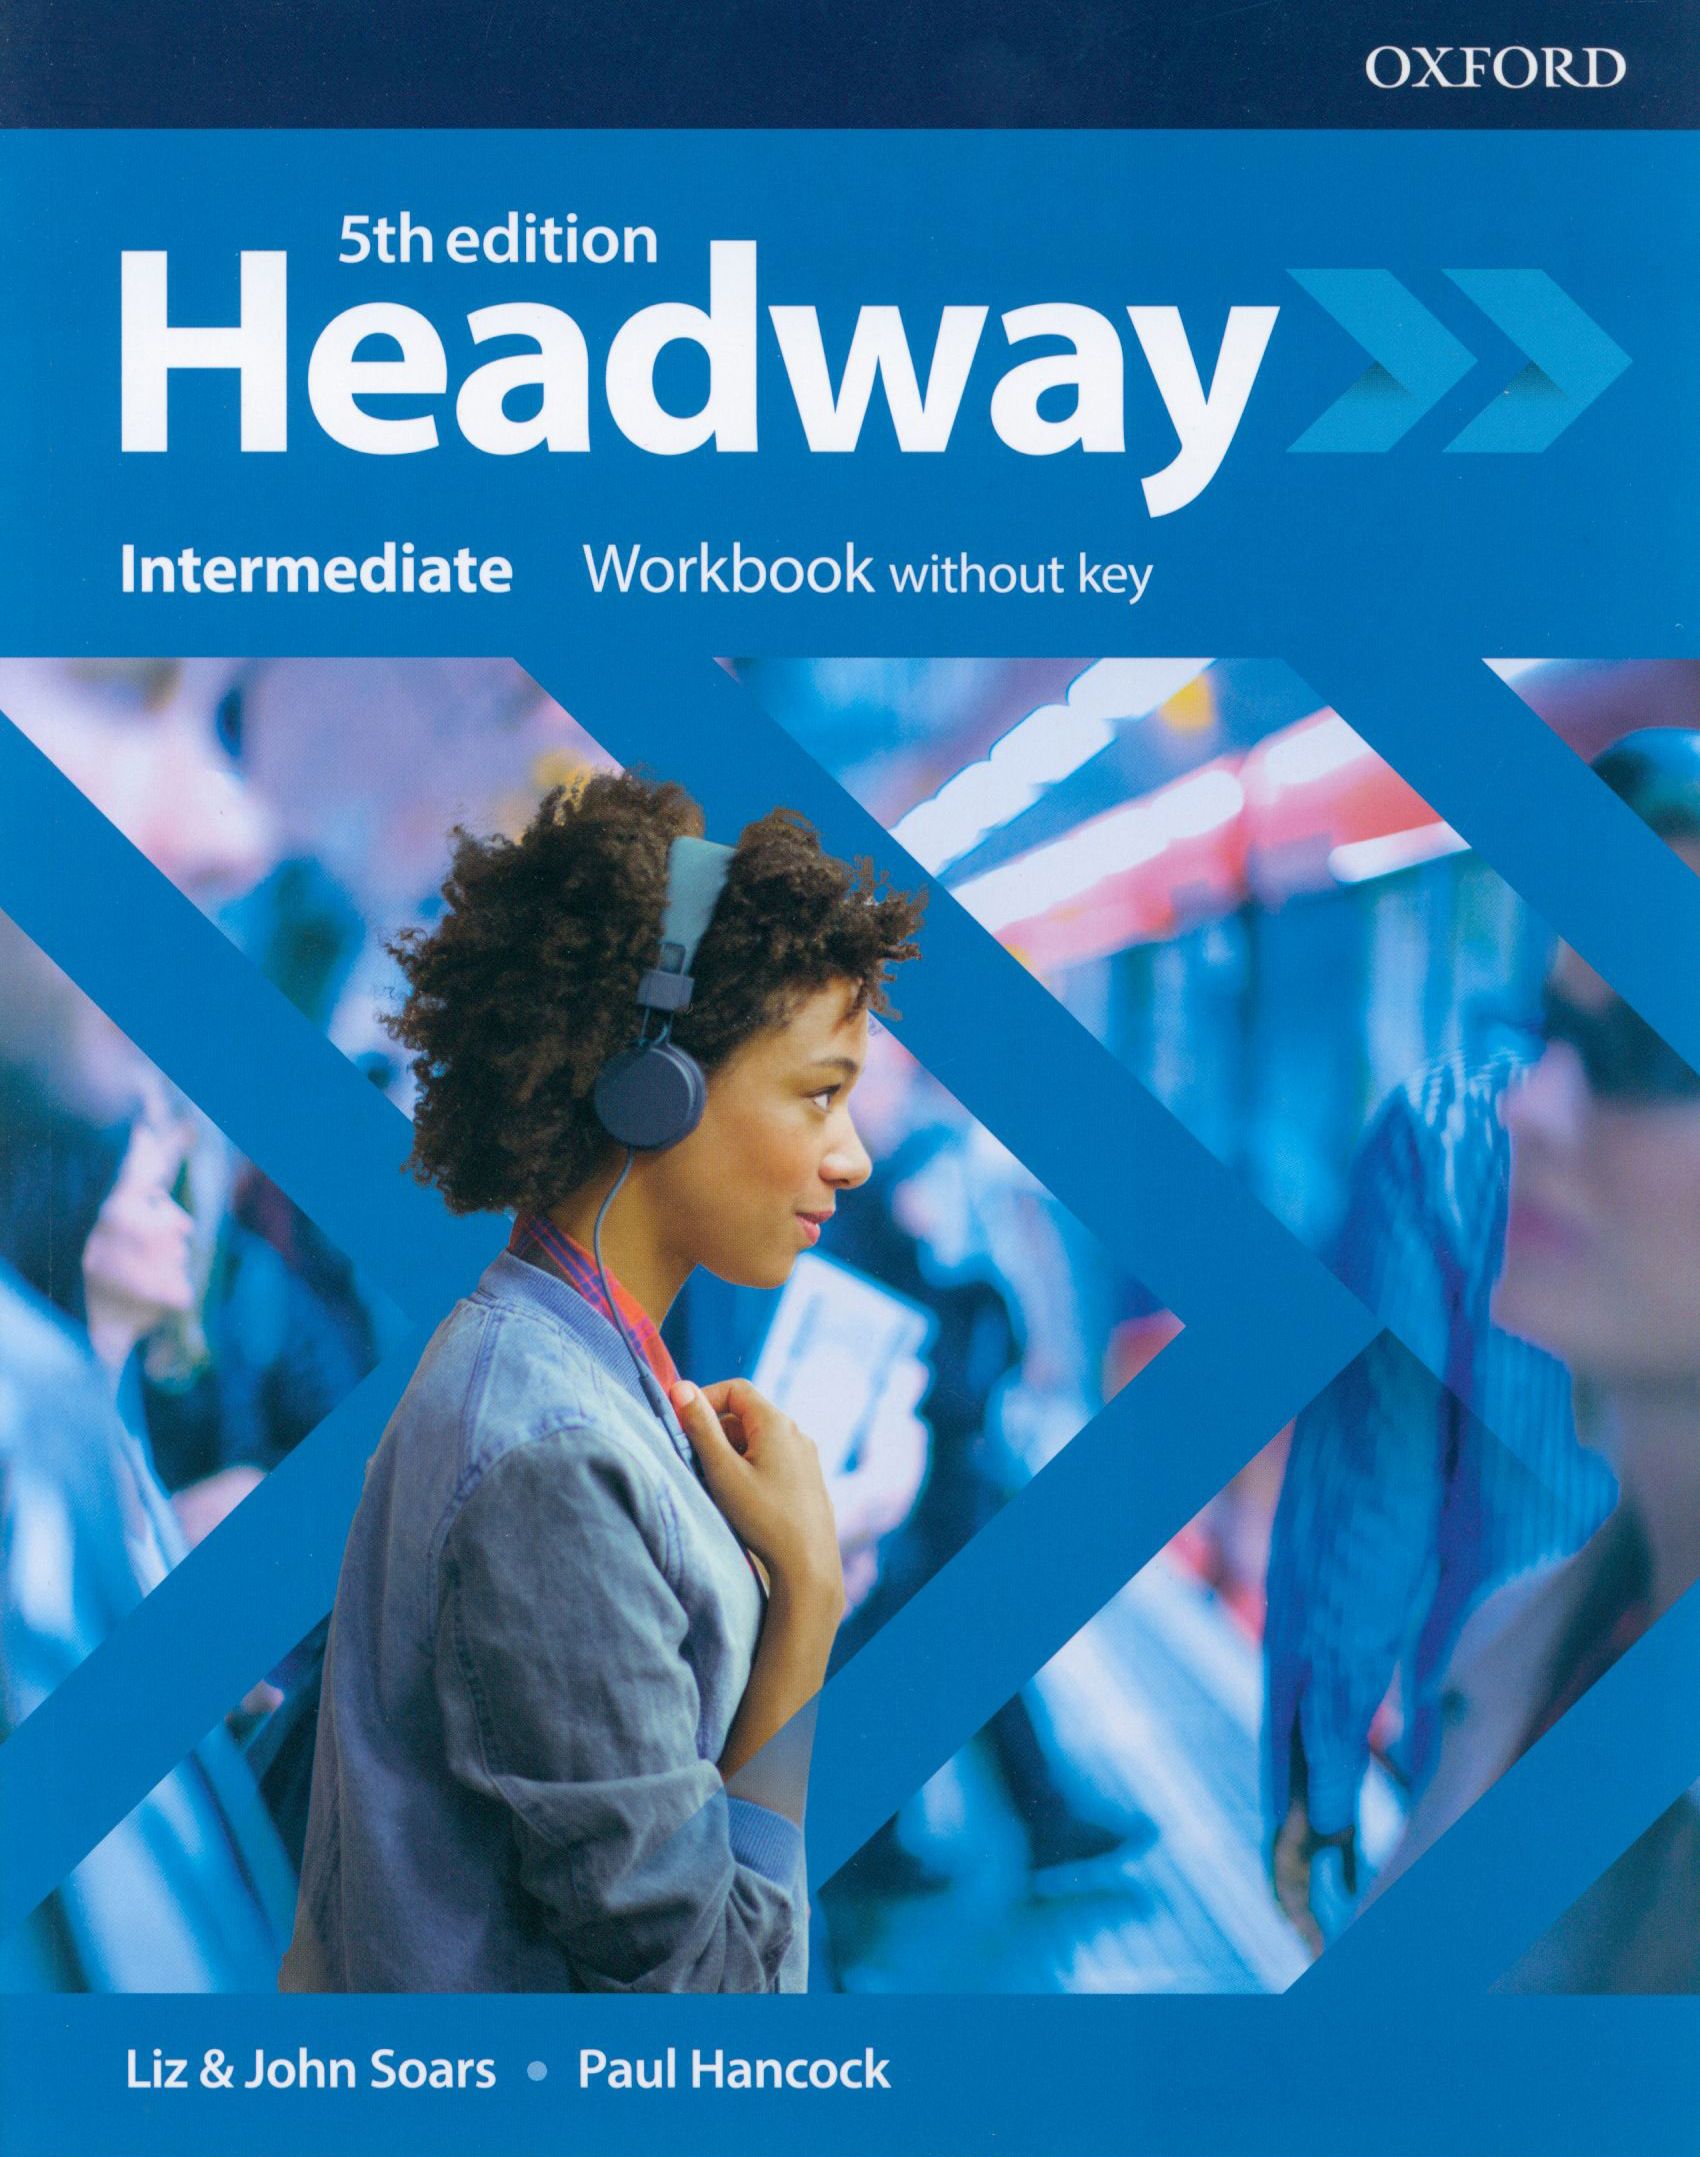 New headway intermediate 5th edition. Oxford 5th Edition Headway. Headway, 5th Edition - 2019. Headway pre-Intermediate 5th Edition. Headway books 5th Edition.